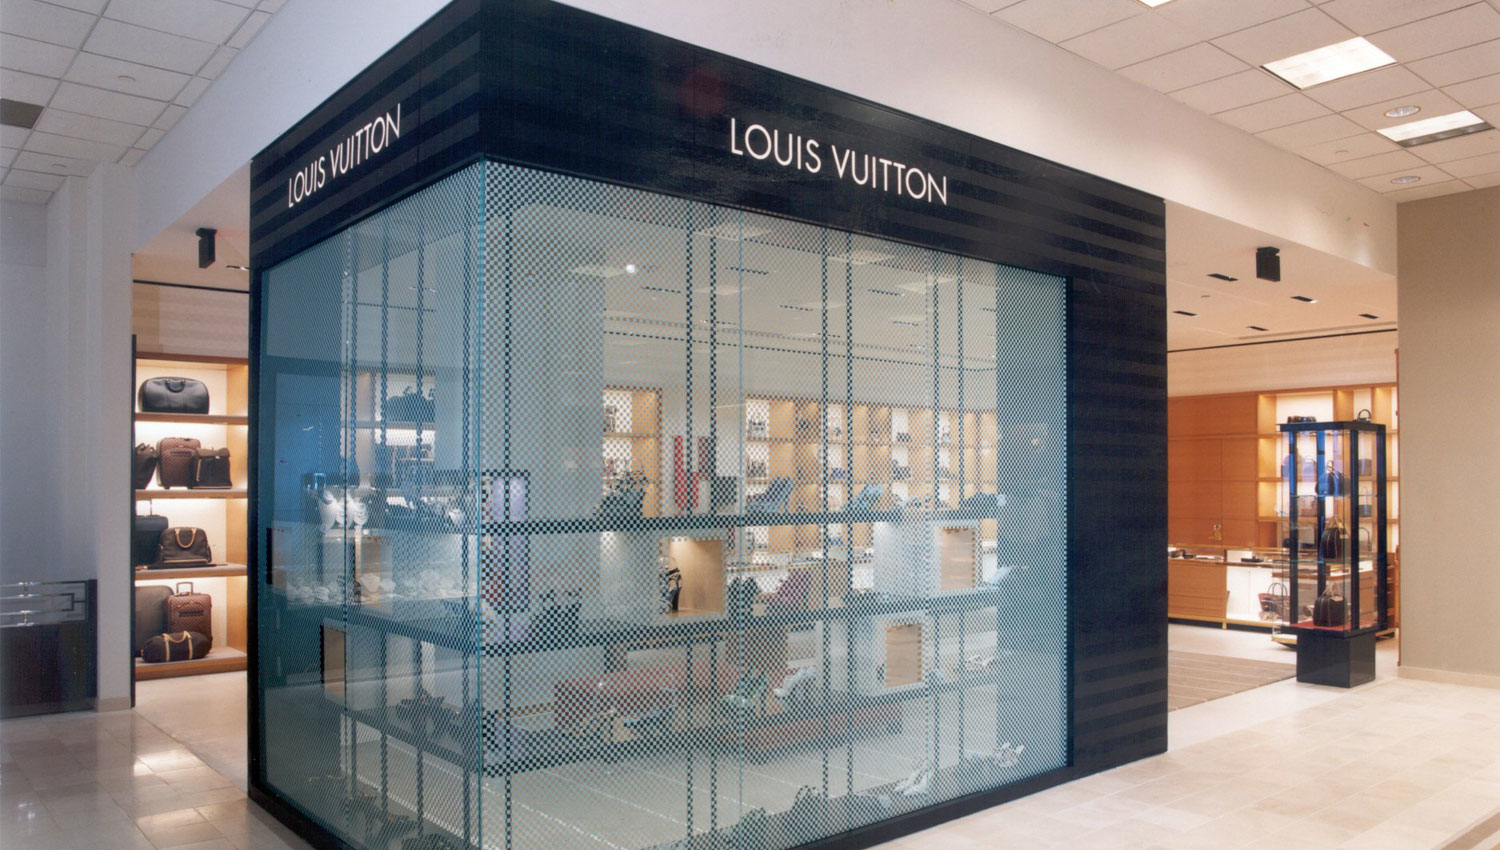 Galleria Mall Louis Vuitton Hours Open | semashow.com